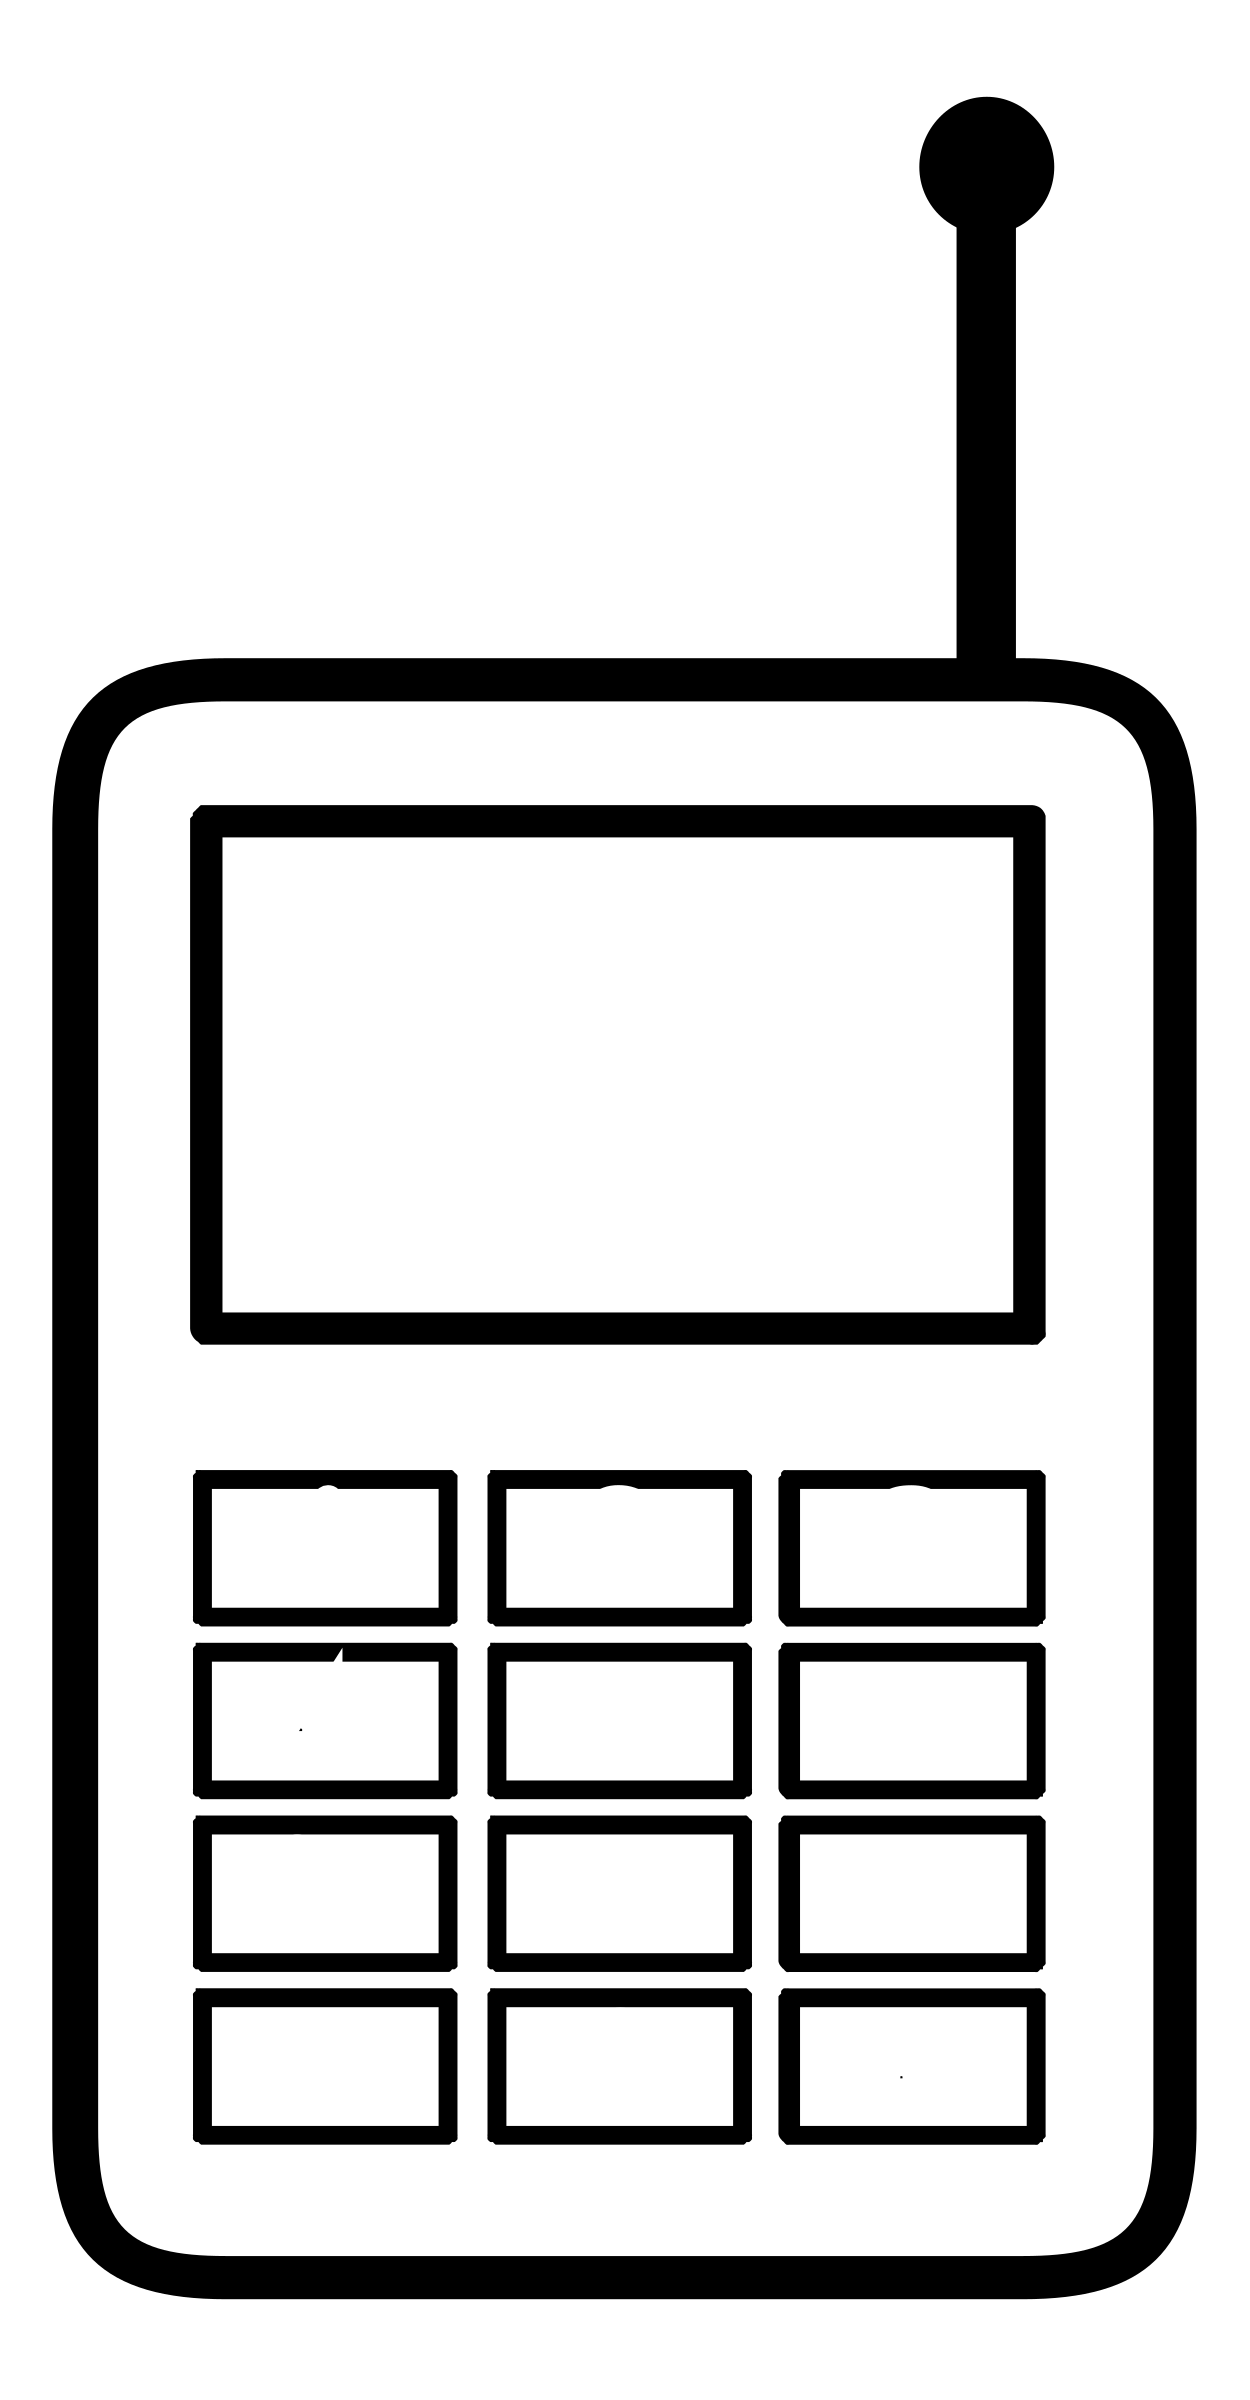 Simple cellphone SVG Clip arts